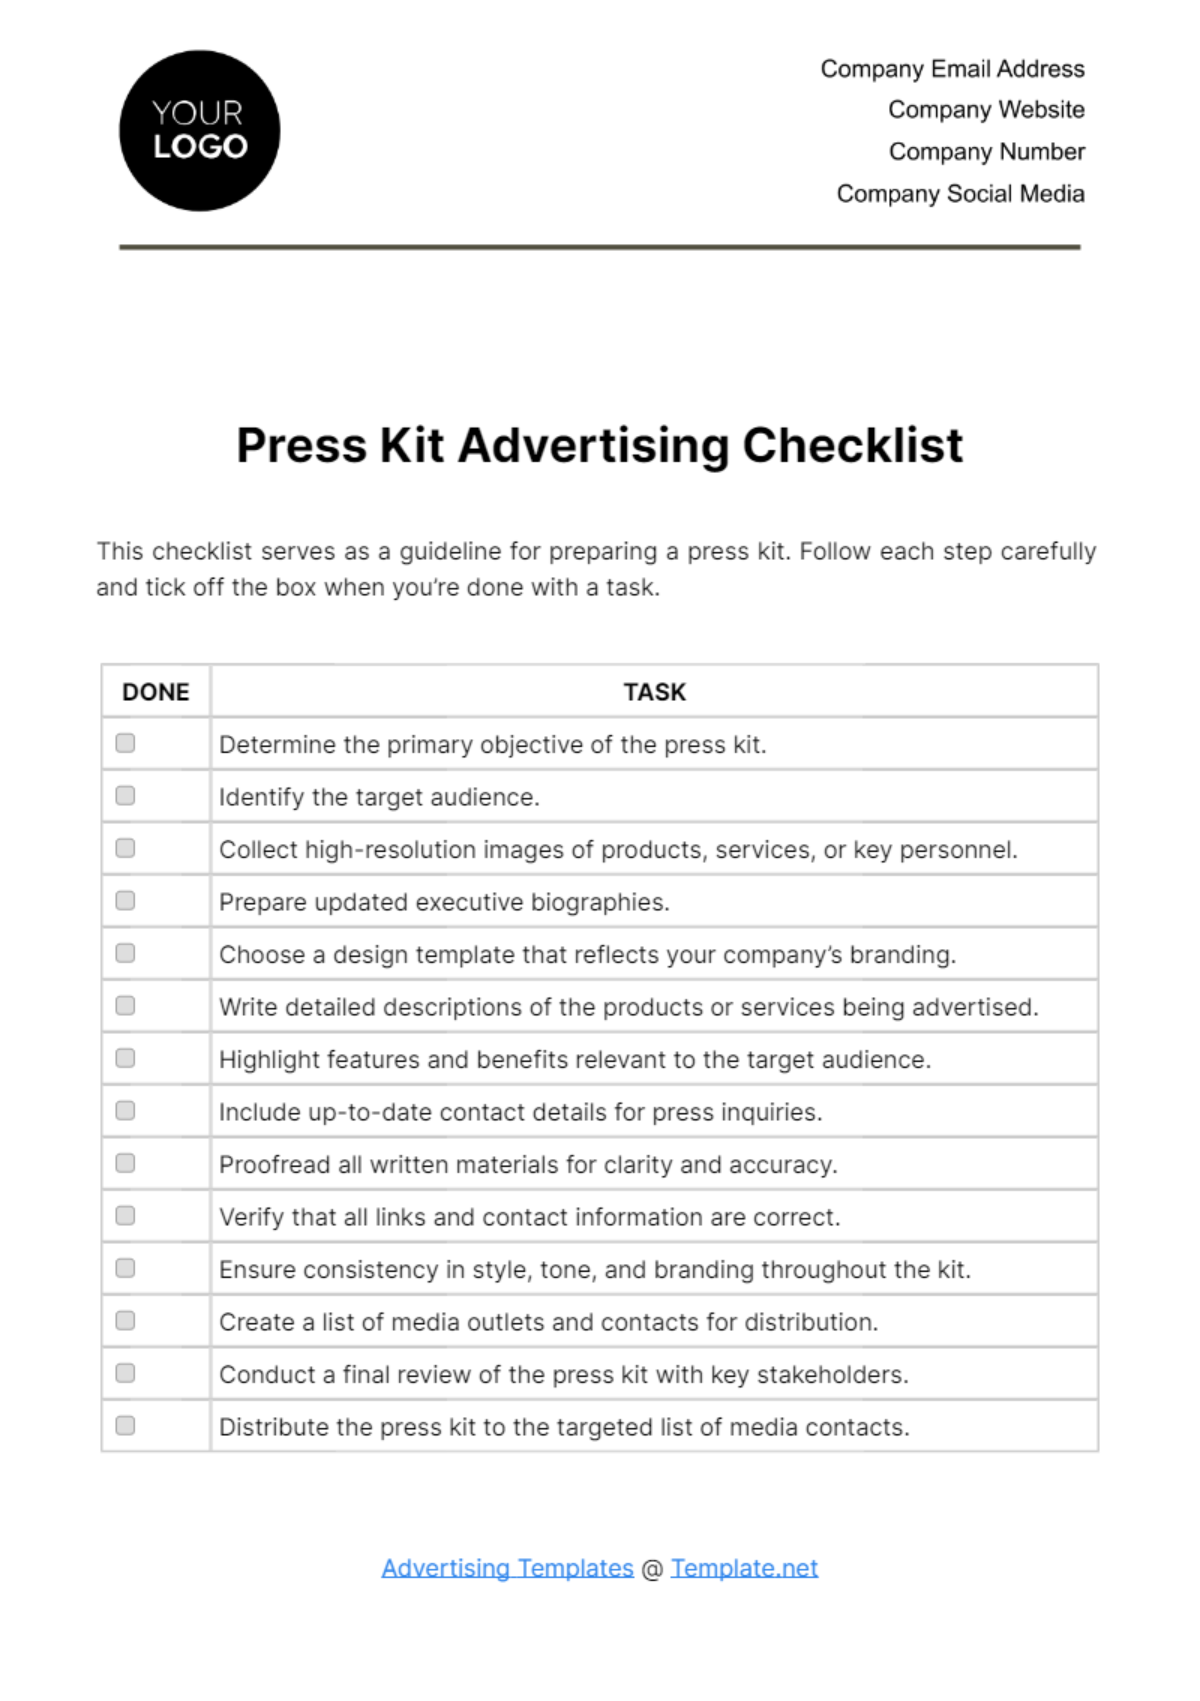 Free Press Kit Advertising Checklist Template